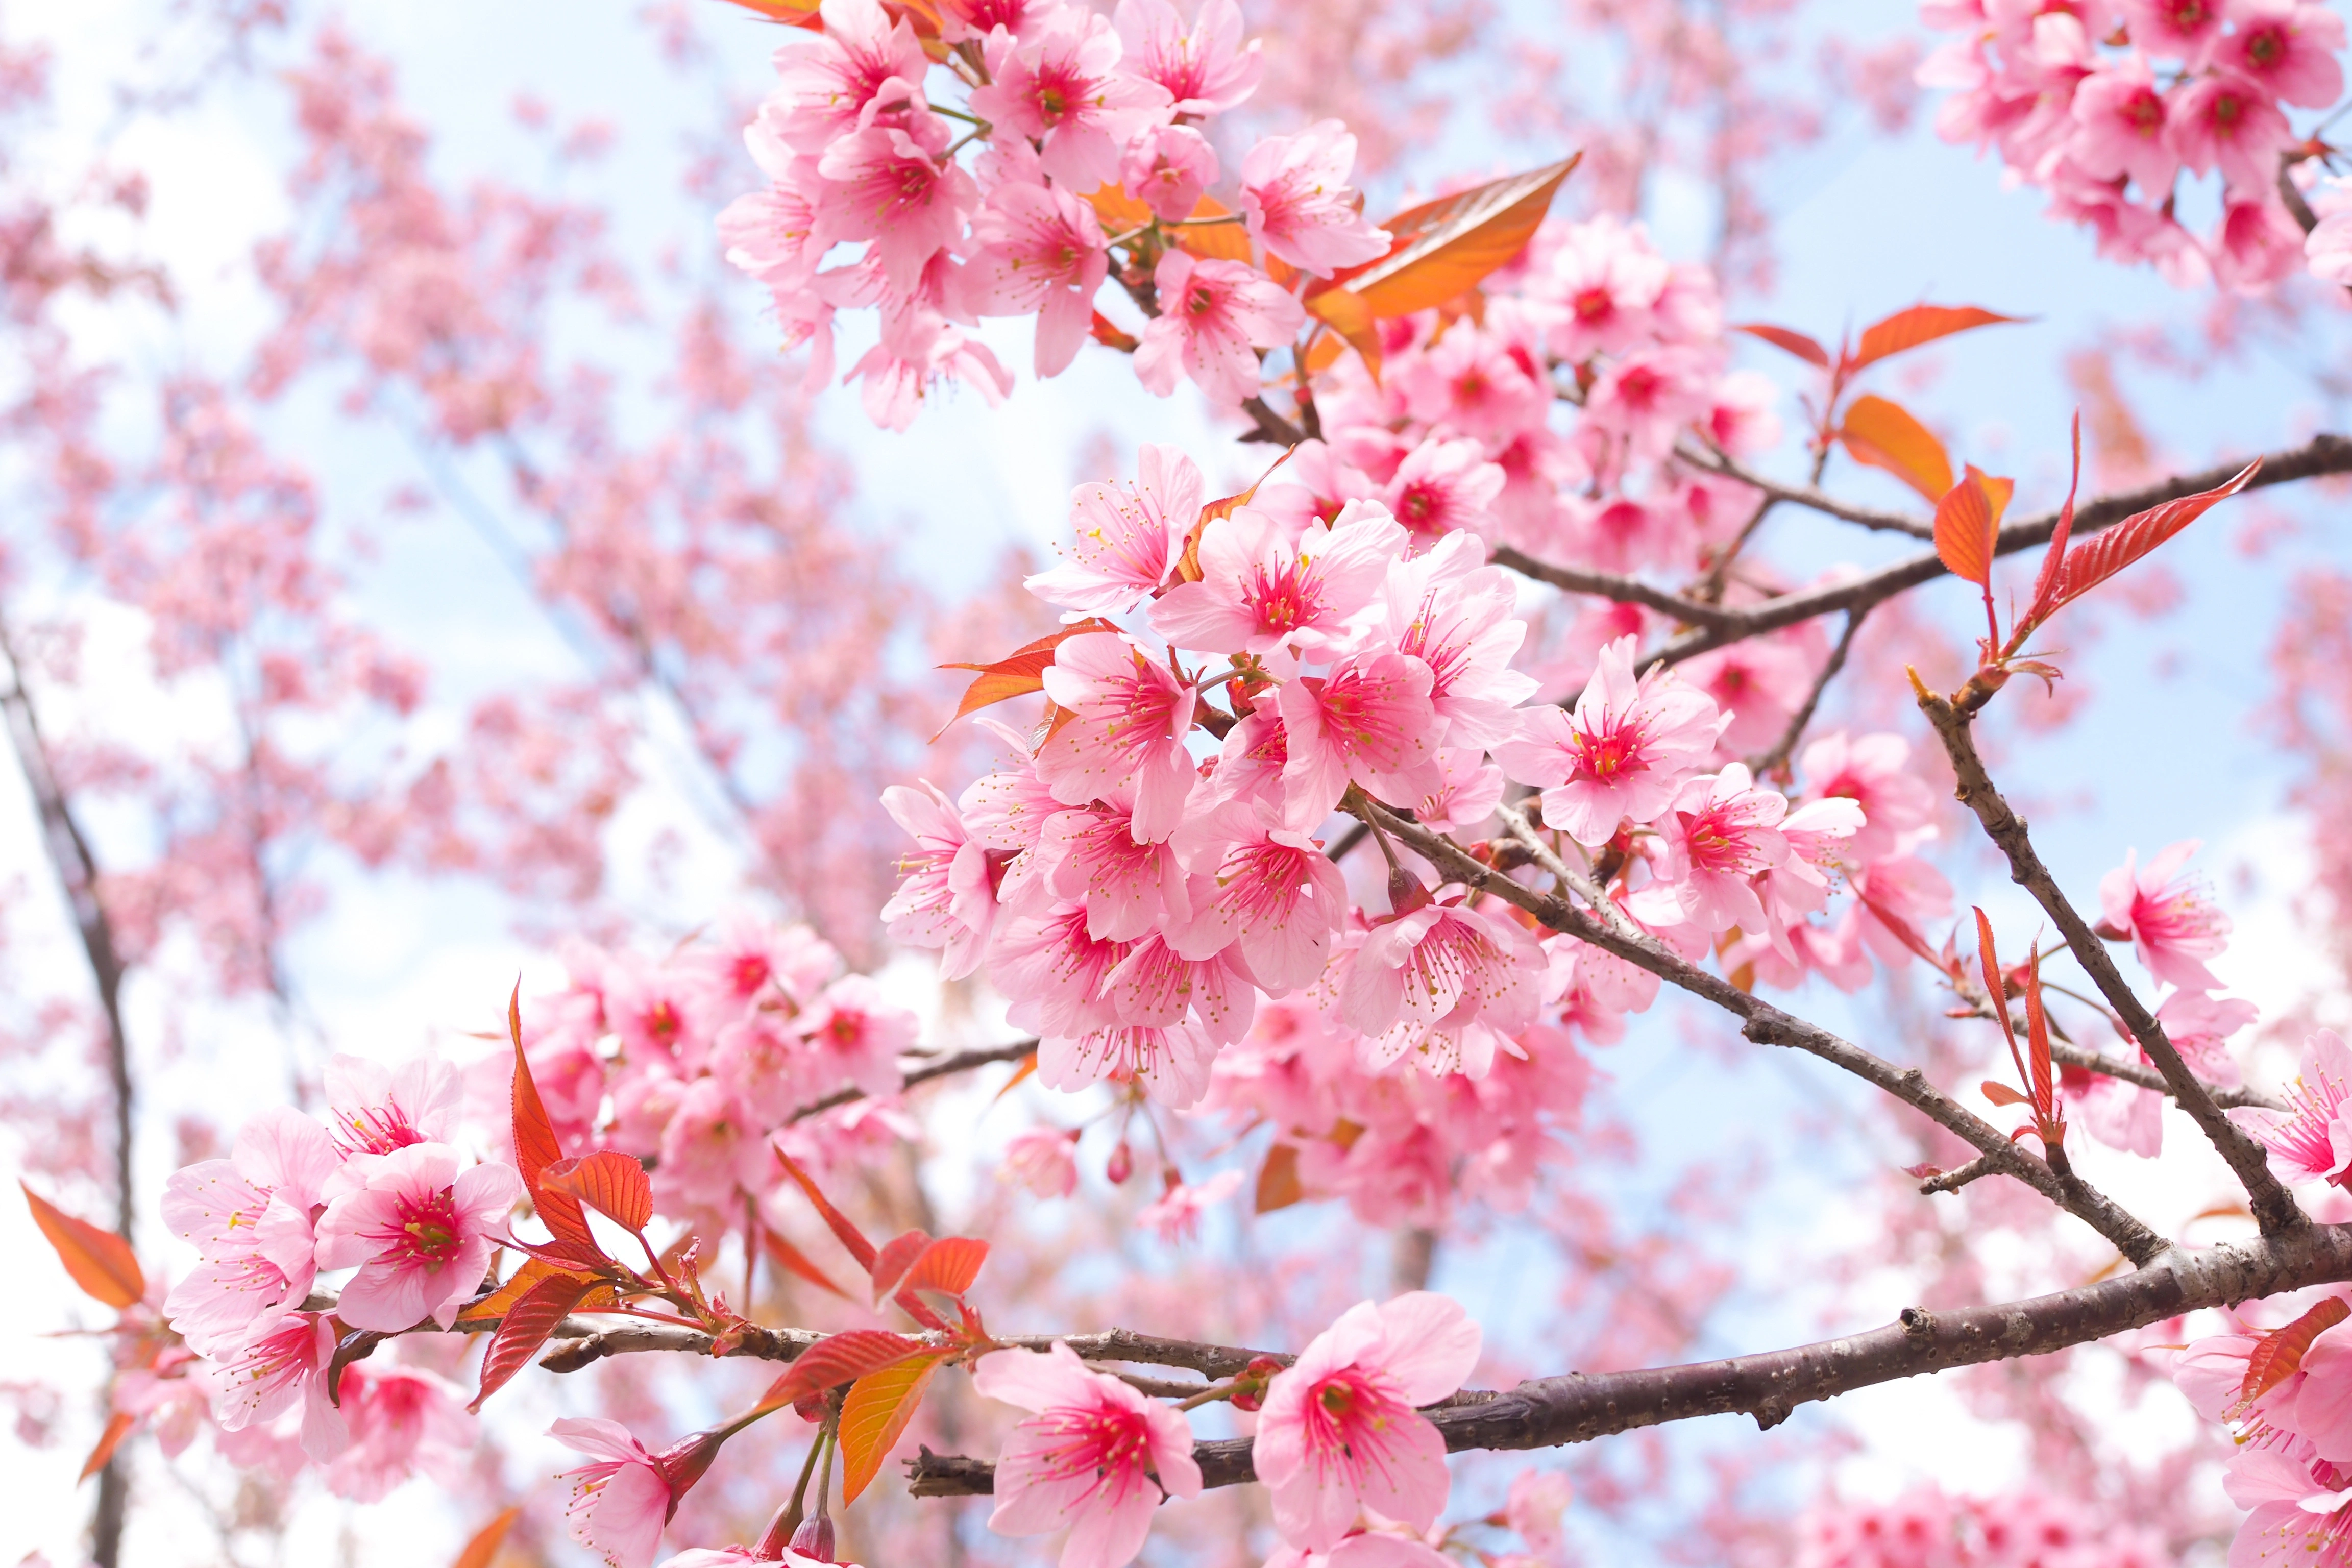 cherry blossom tree branches 4k 1606577835 - Cherry Blossom Tree Branches 4k - Cherry Blossom Tree Branches 4k wallpapers